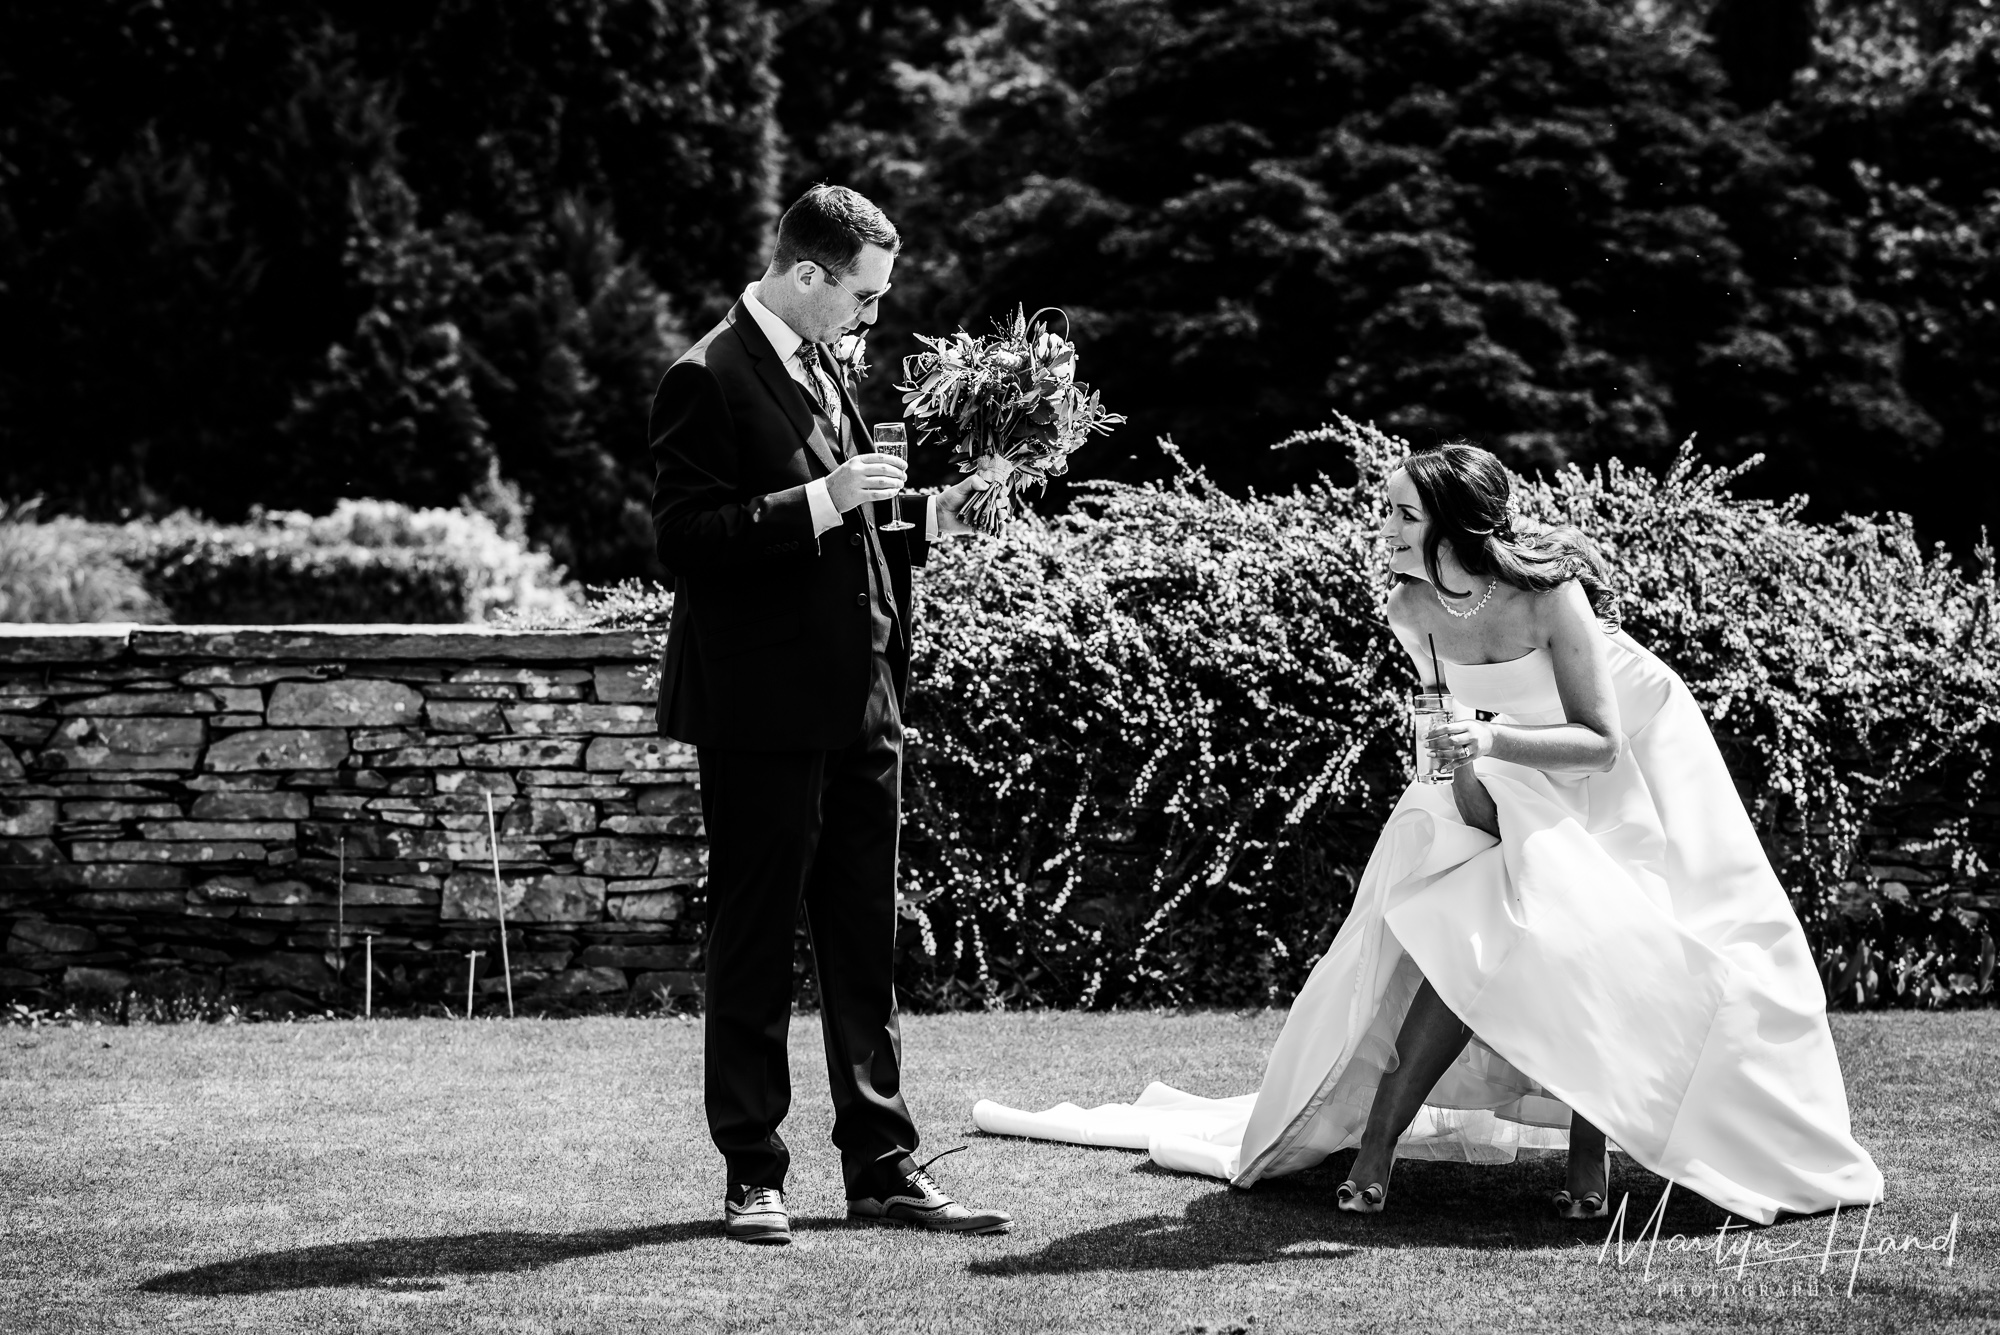 Cragwood Country House Wedding Photographer Martyn Hand Photogra